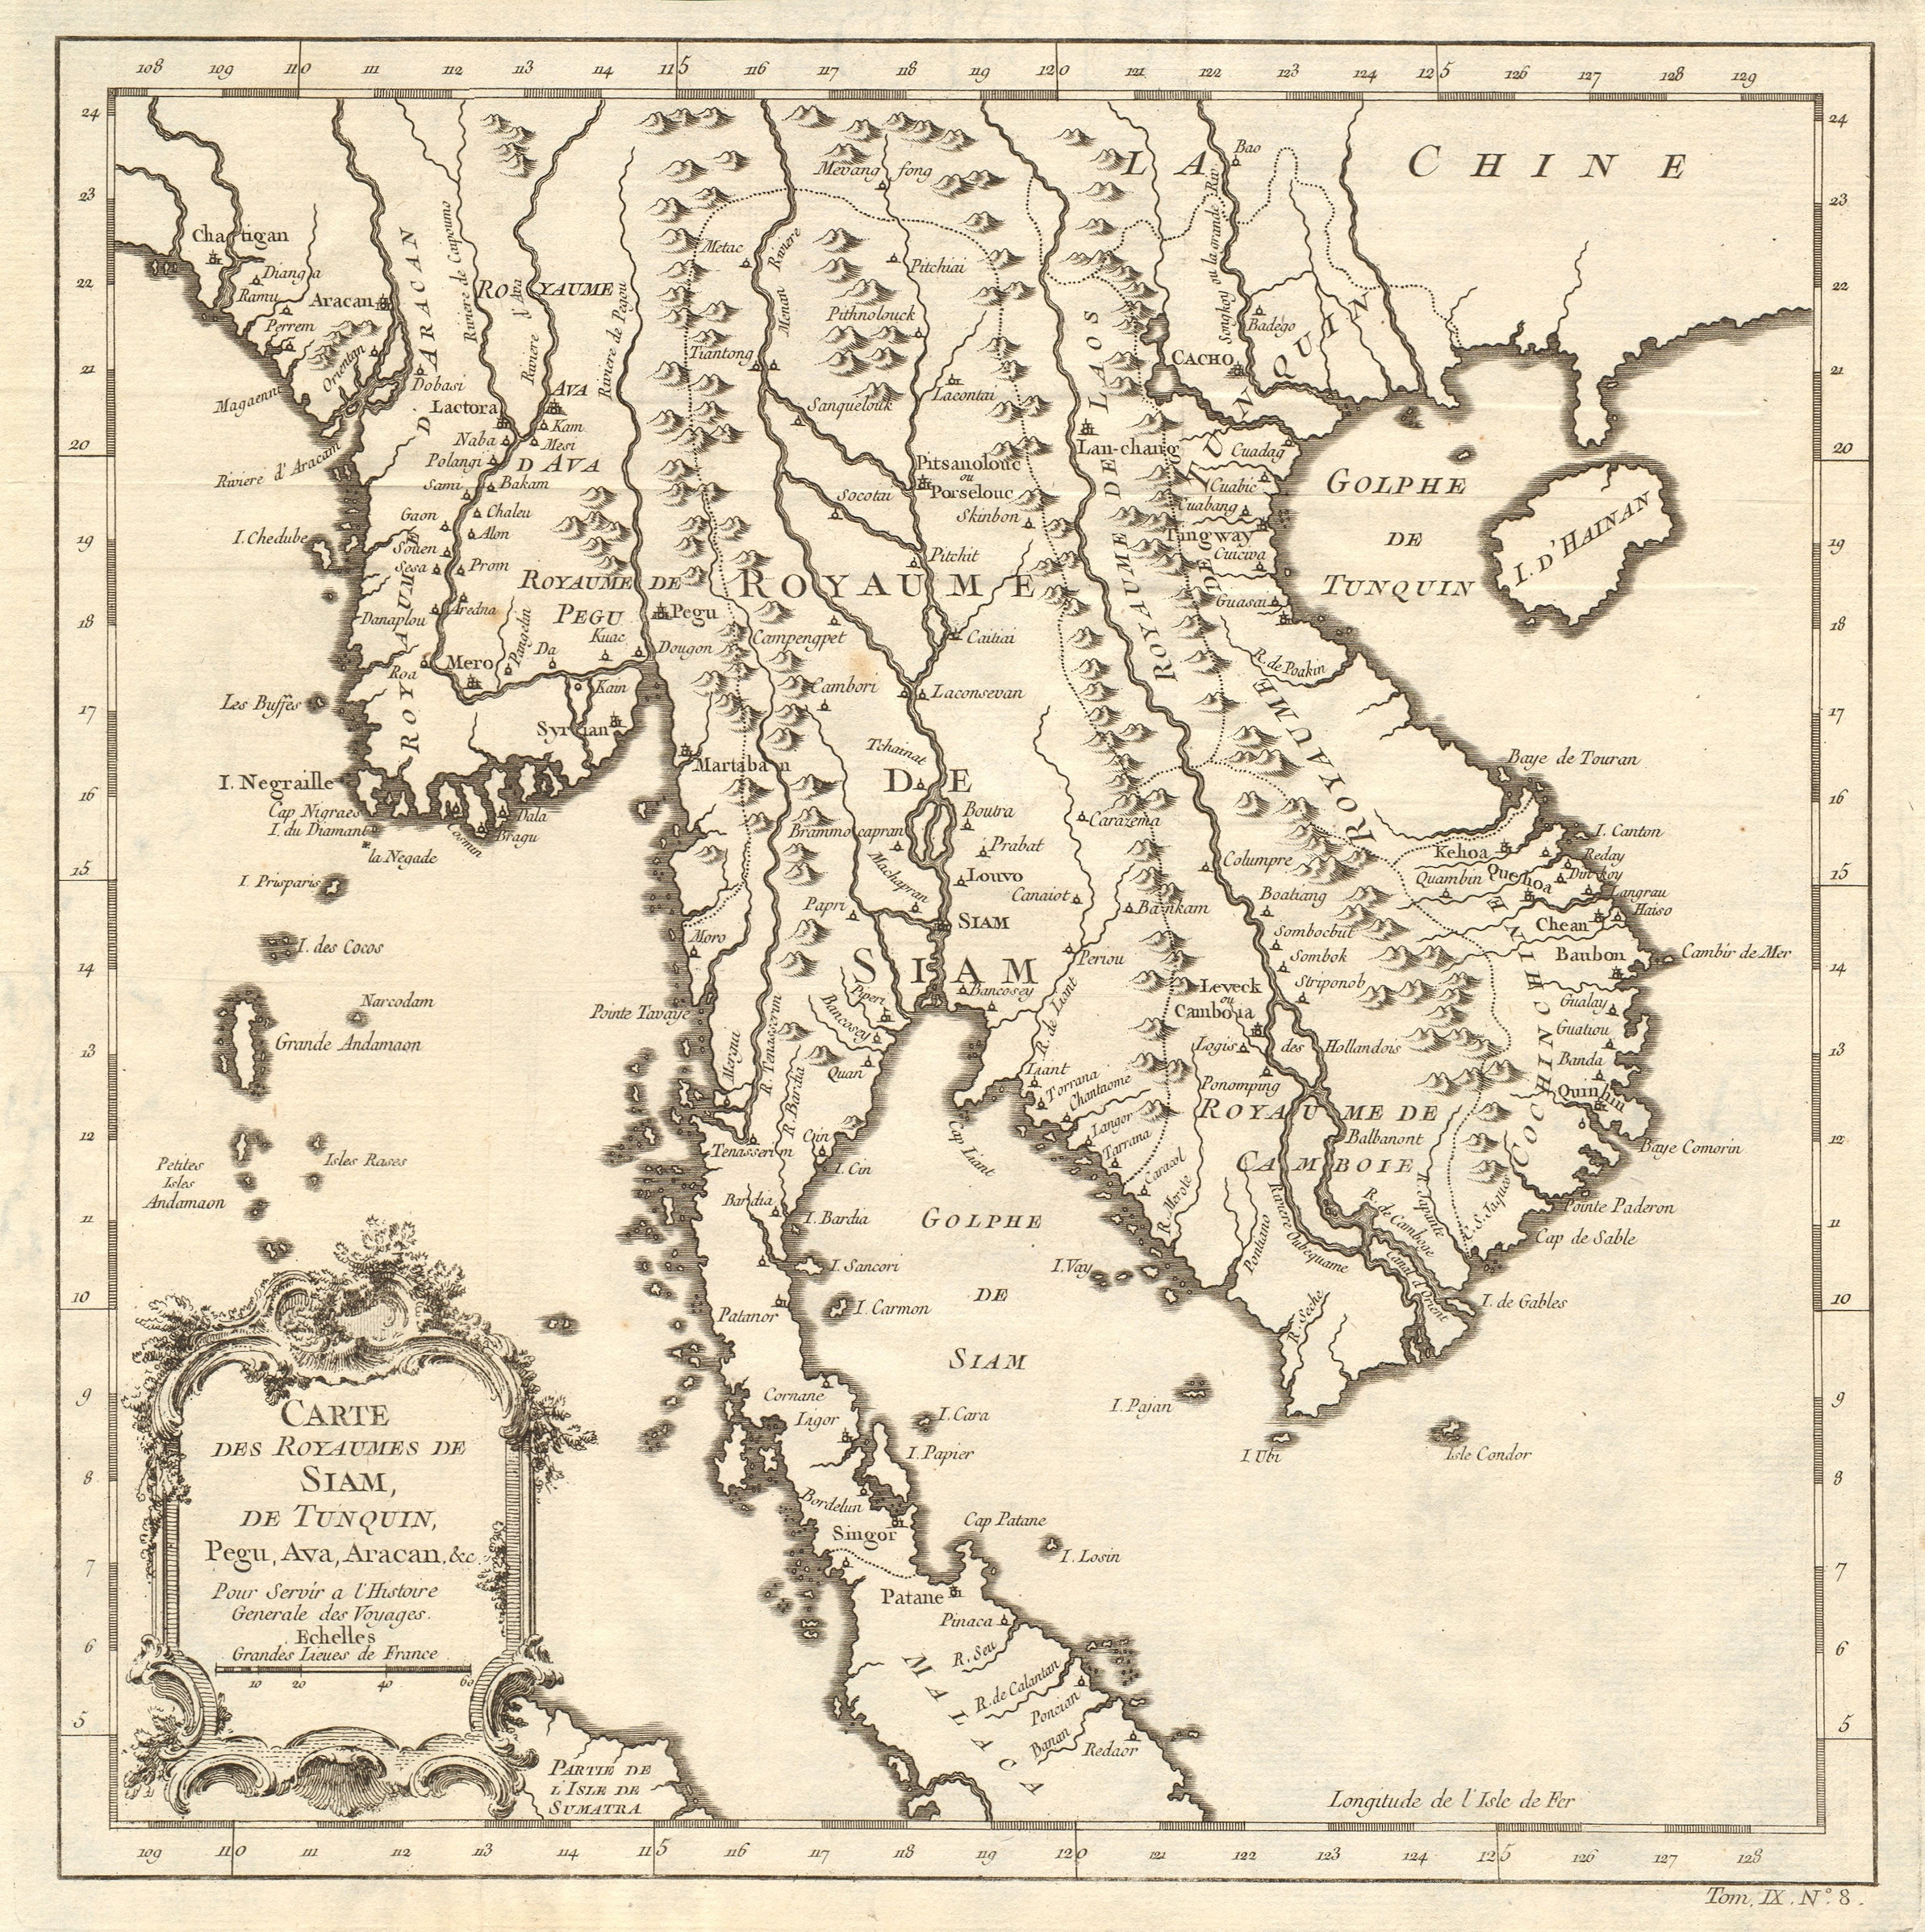 Associate Product 'Royaumes de Siam, Tunquin, Pegu, Ava, Aracan'. Indochina. BELLIN 1751 old map